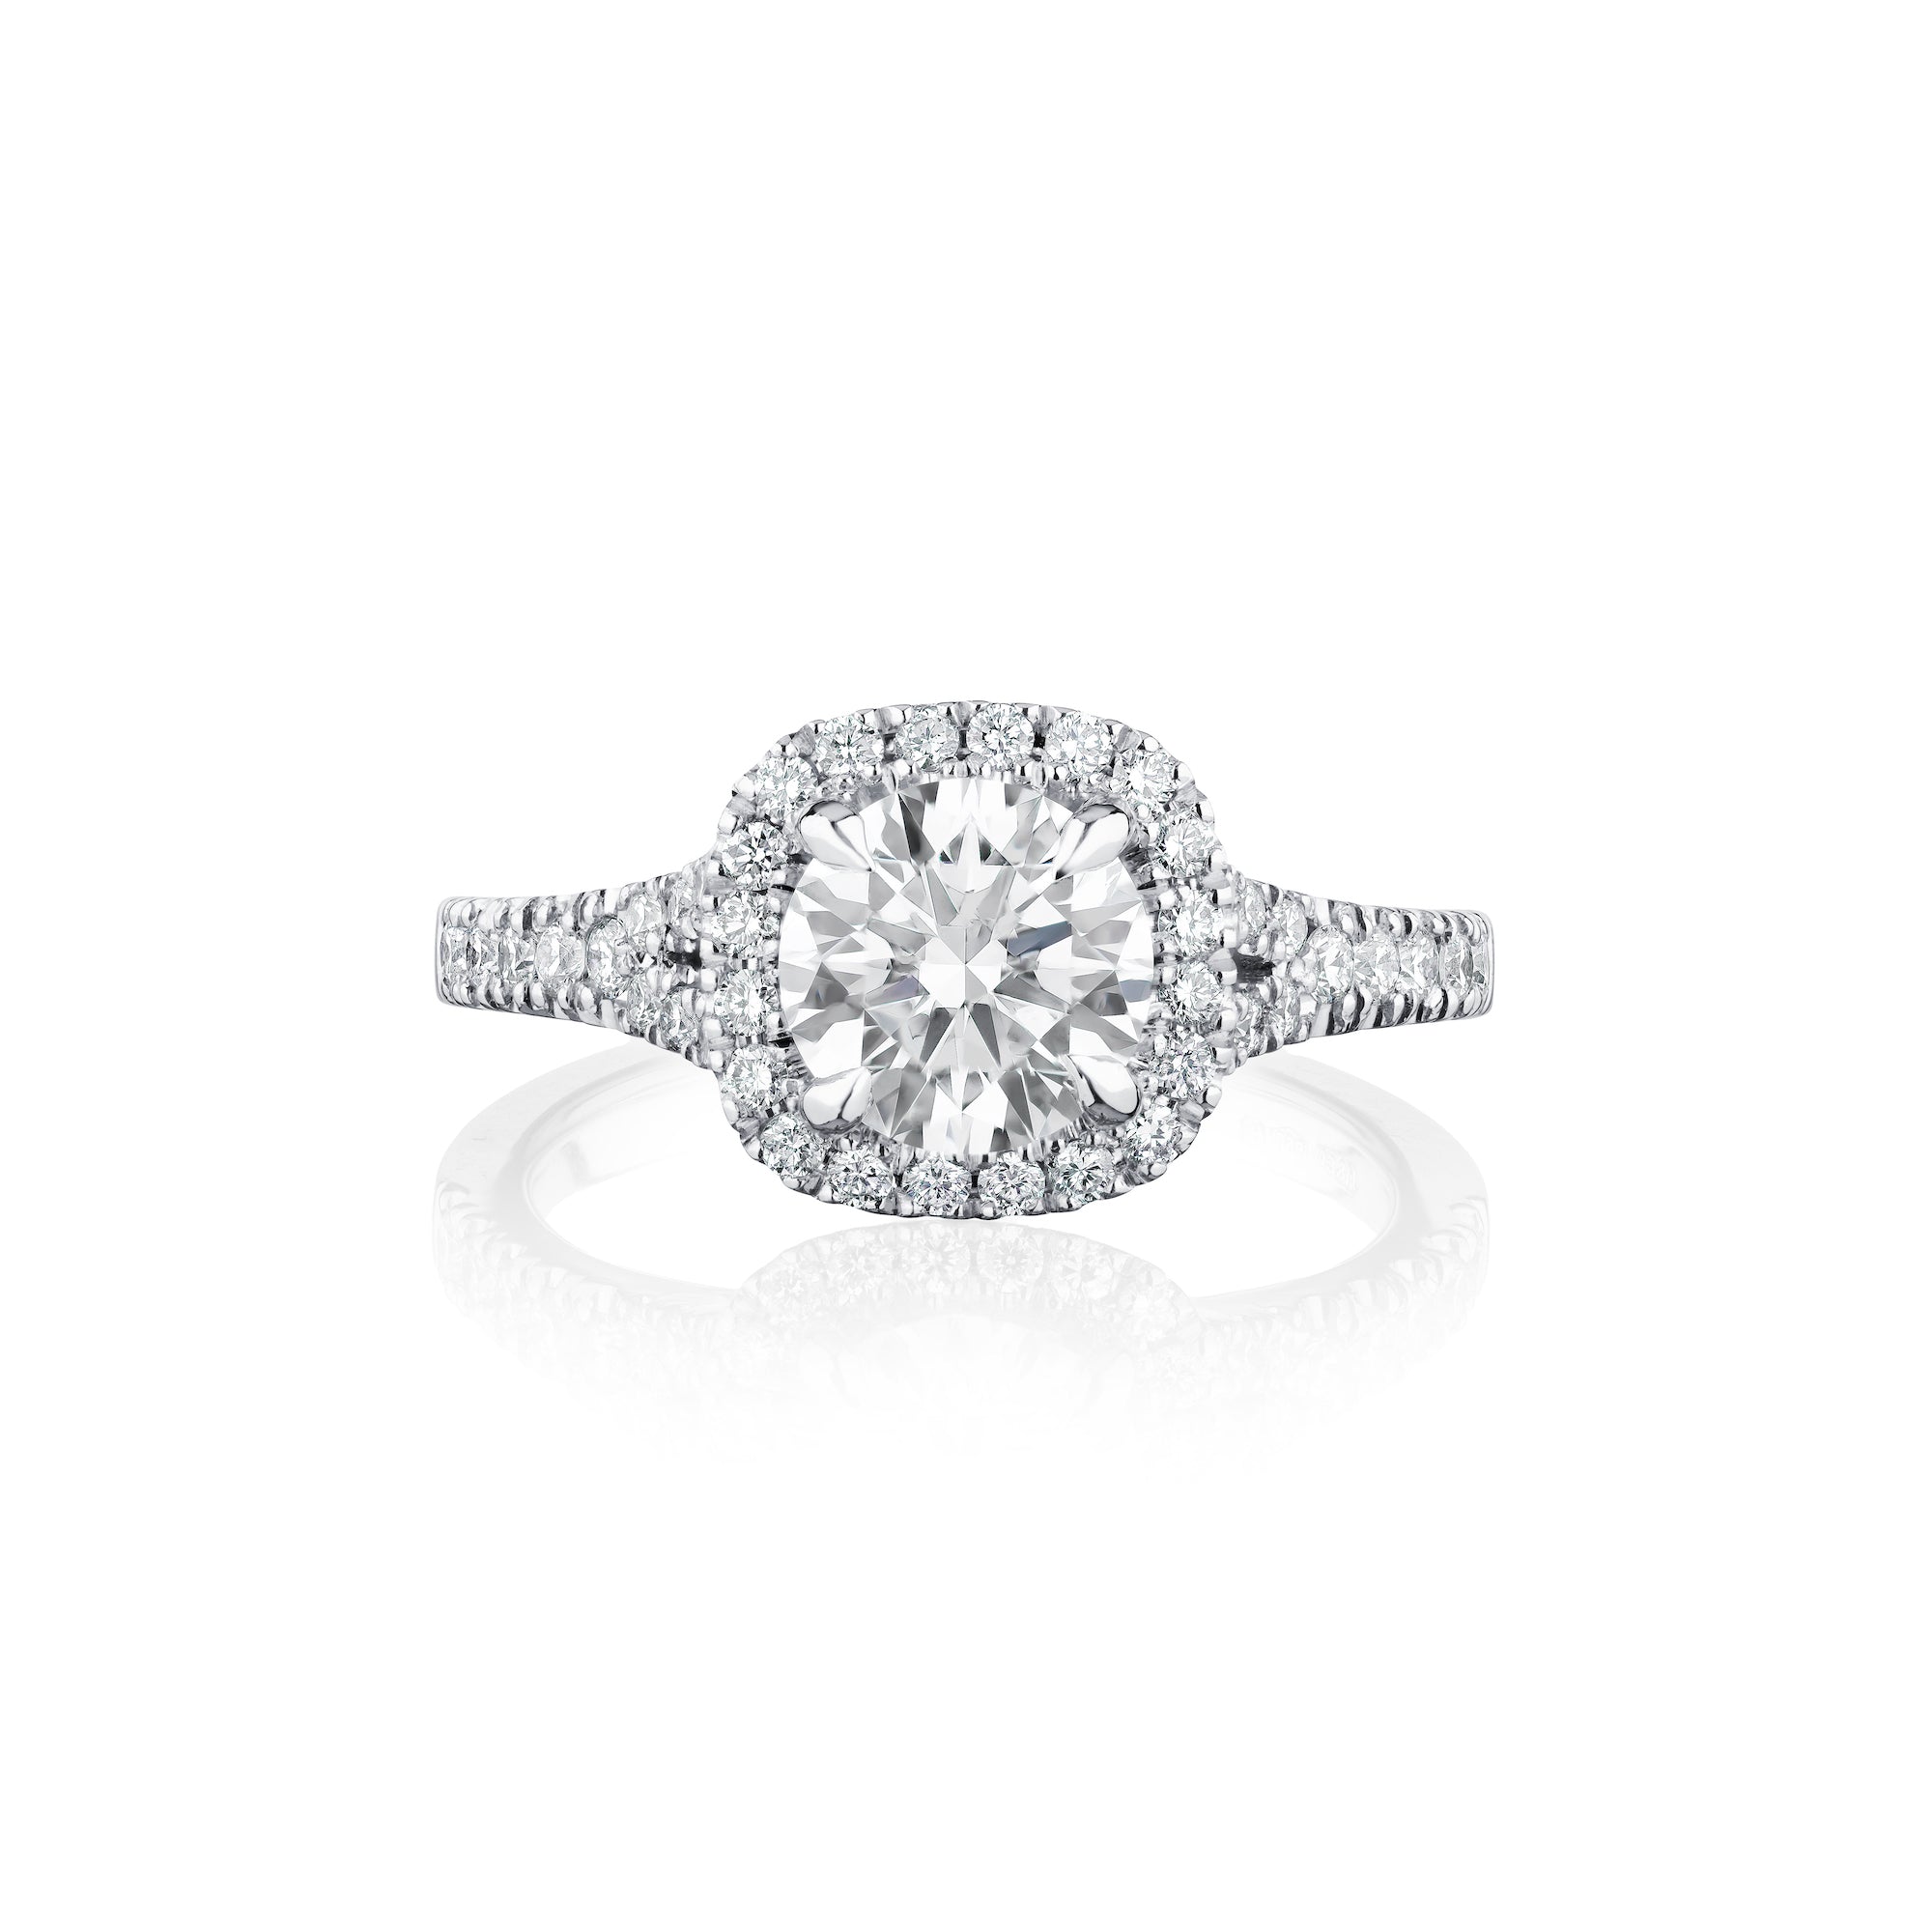 Diamond rings Jewellery Quarter Birmingham romantic shape cut by Mitchel & Co